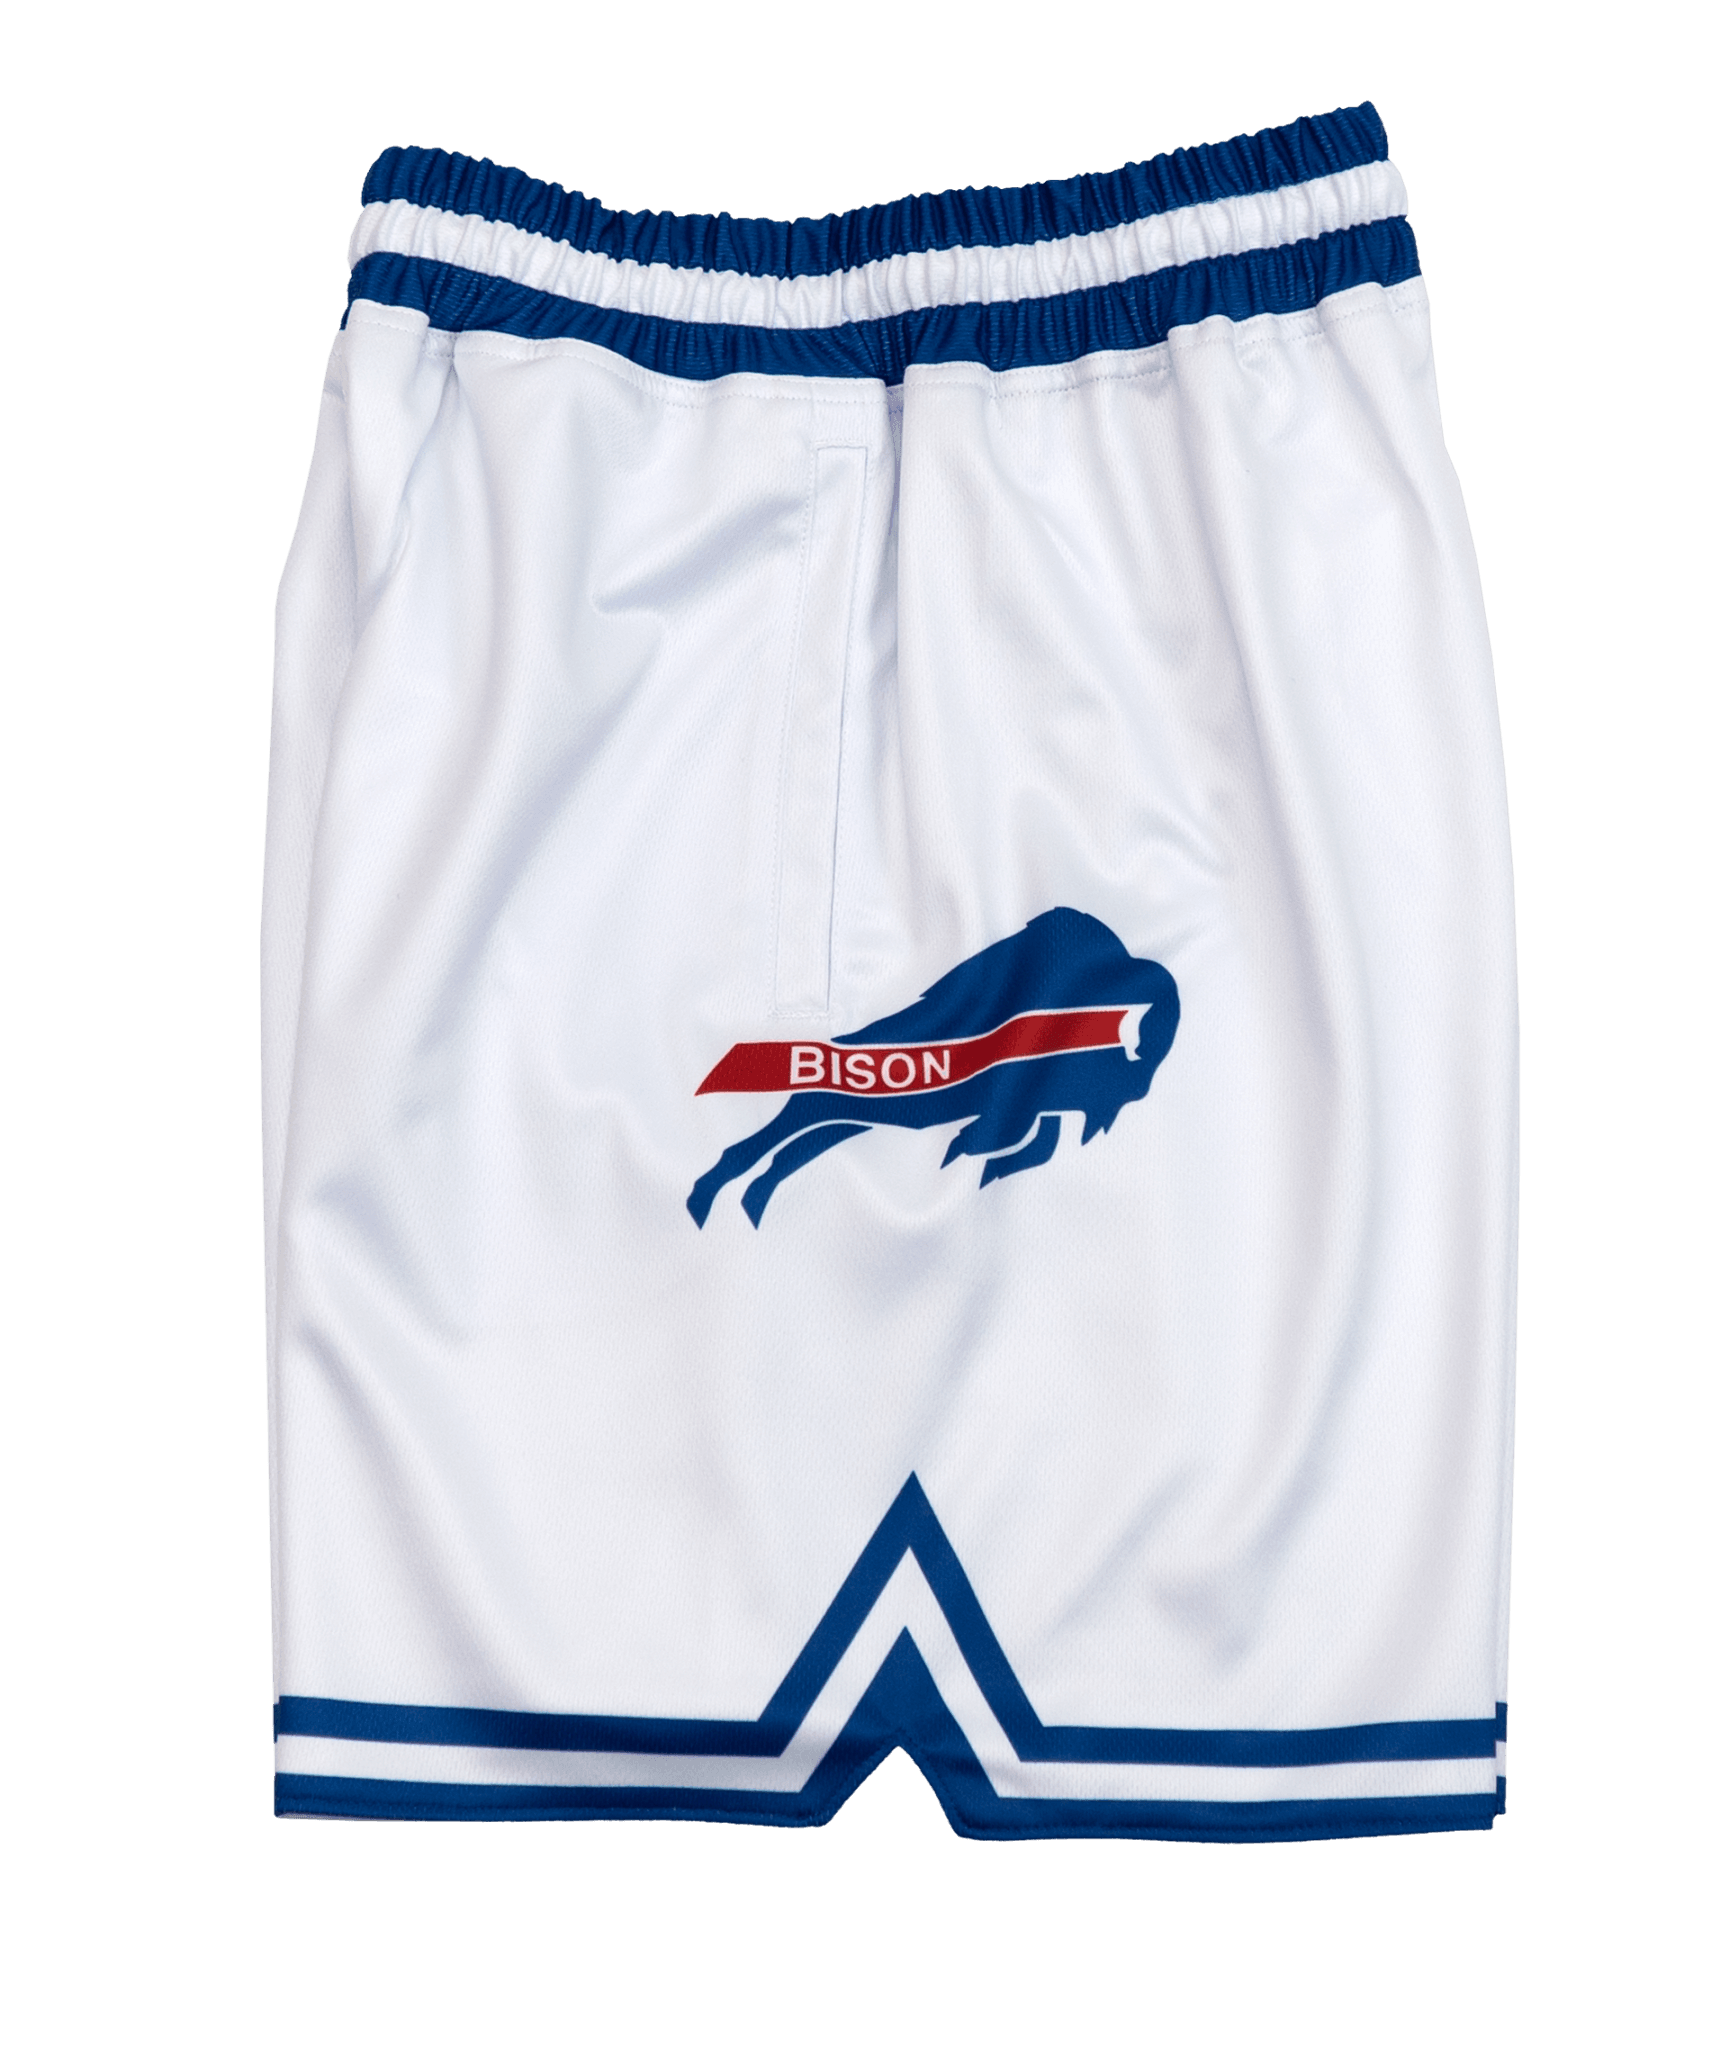 Michigan Wolverines 1991-1992 Retro Shorts – SLAM Goods